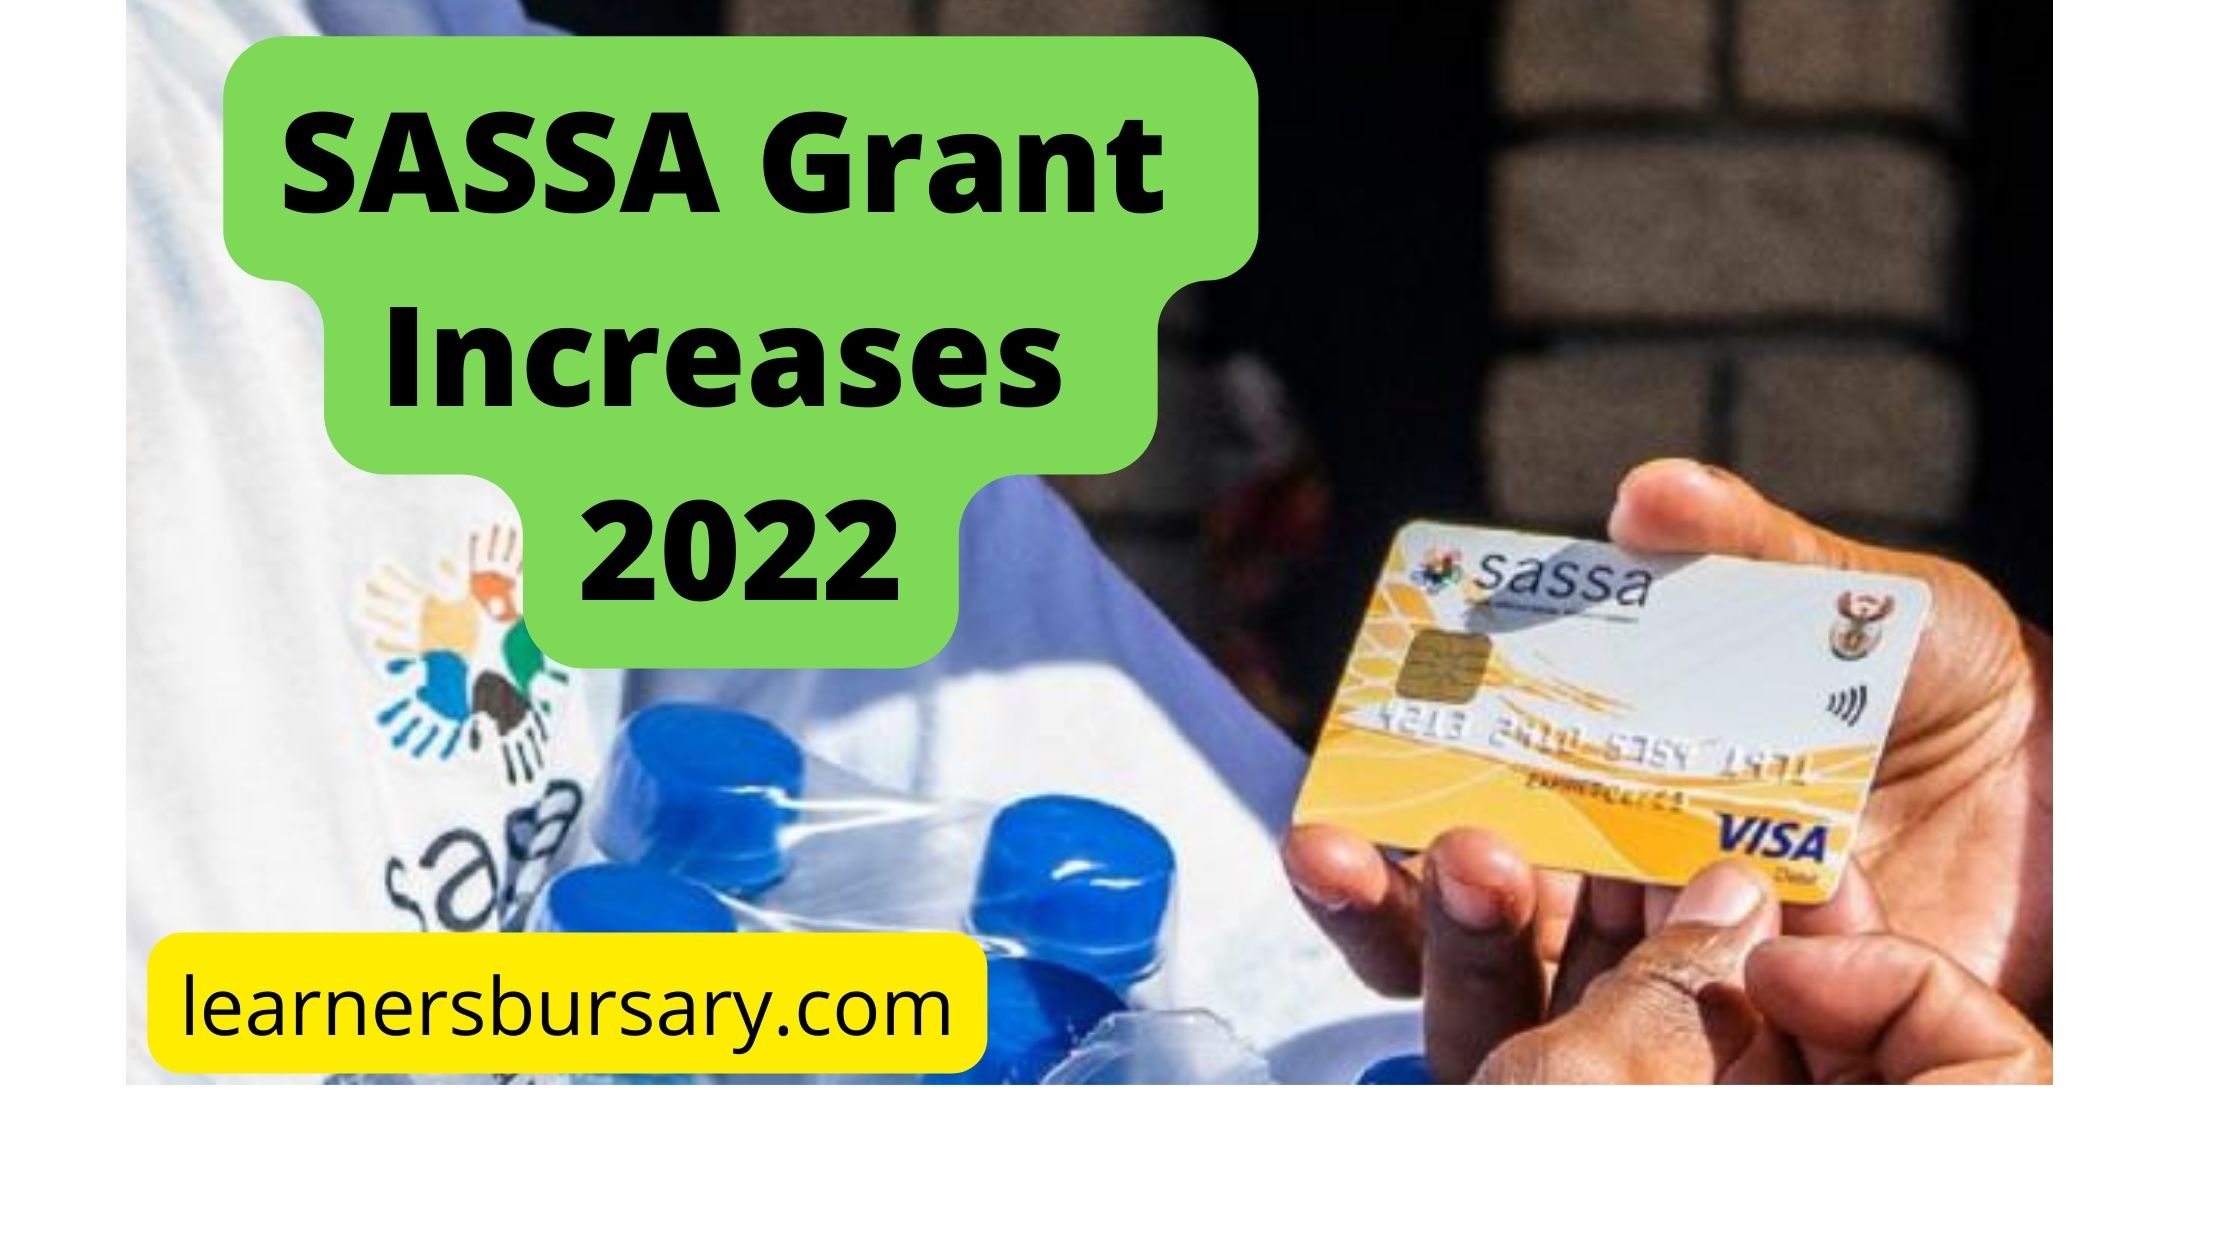 SASSA Grant Increases 2022